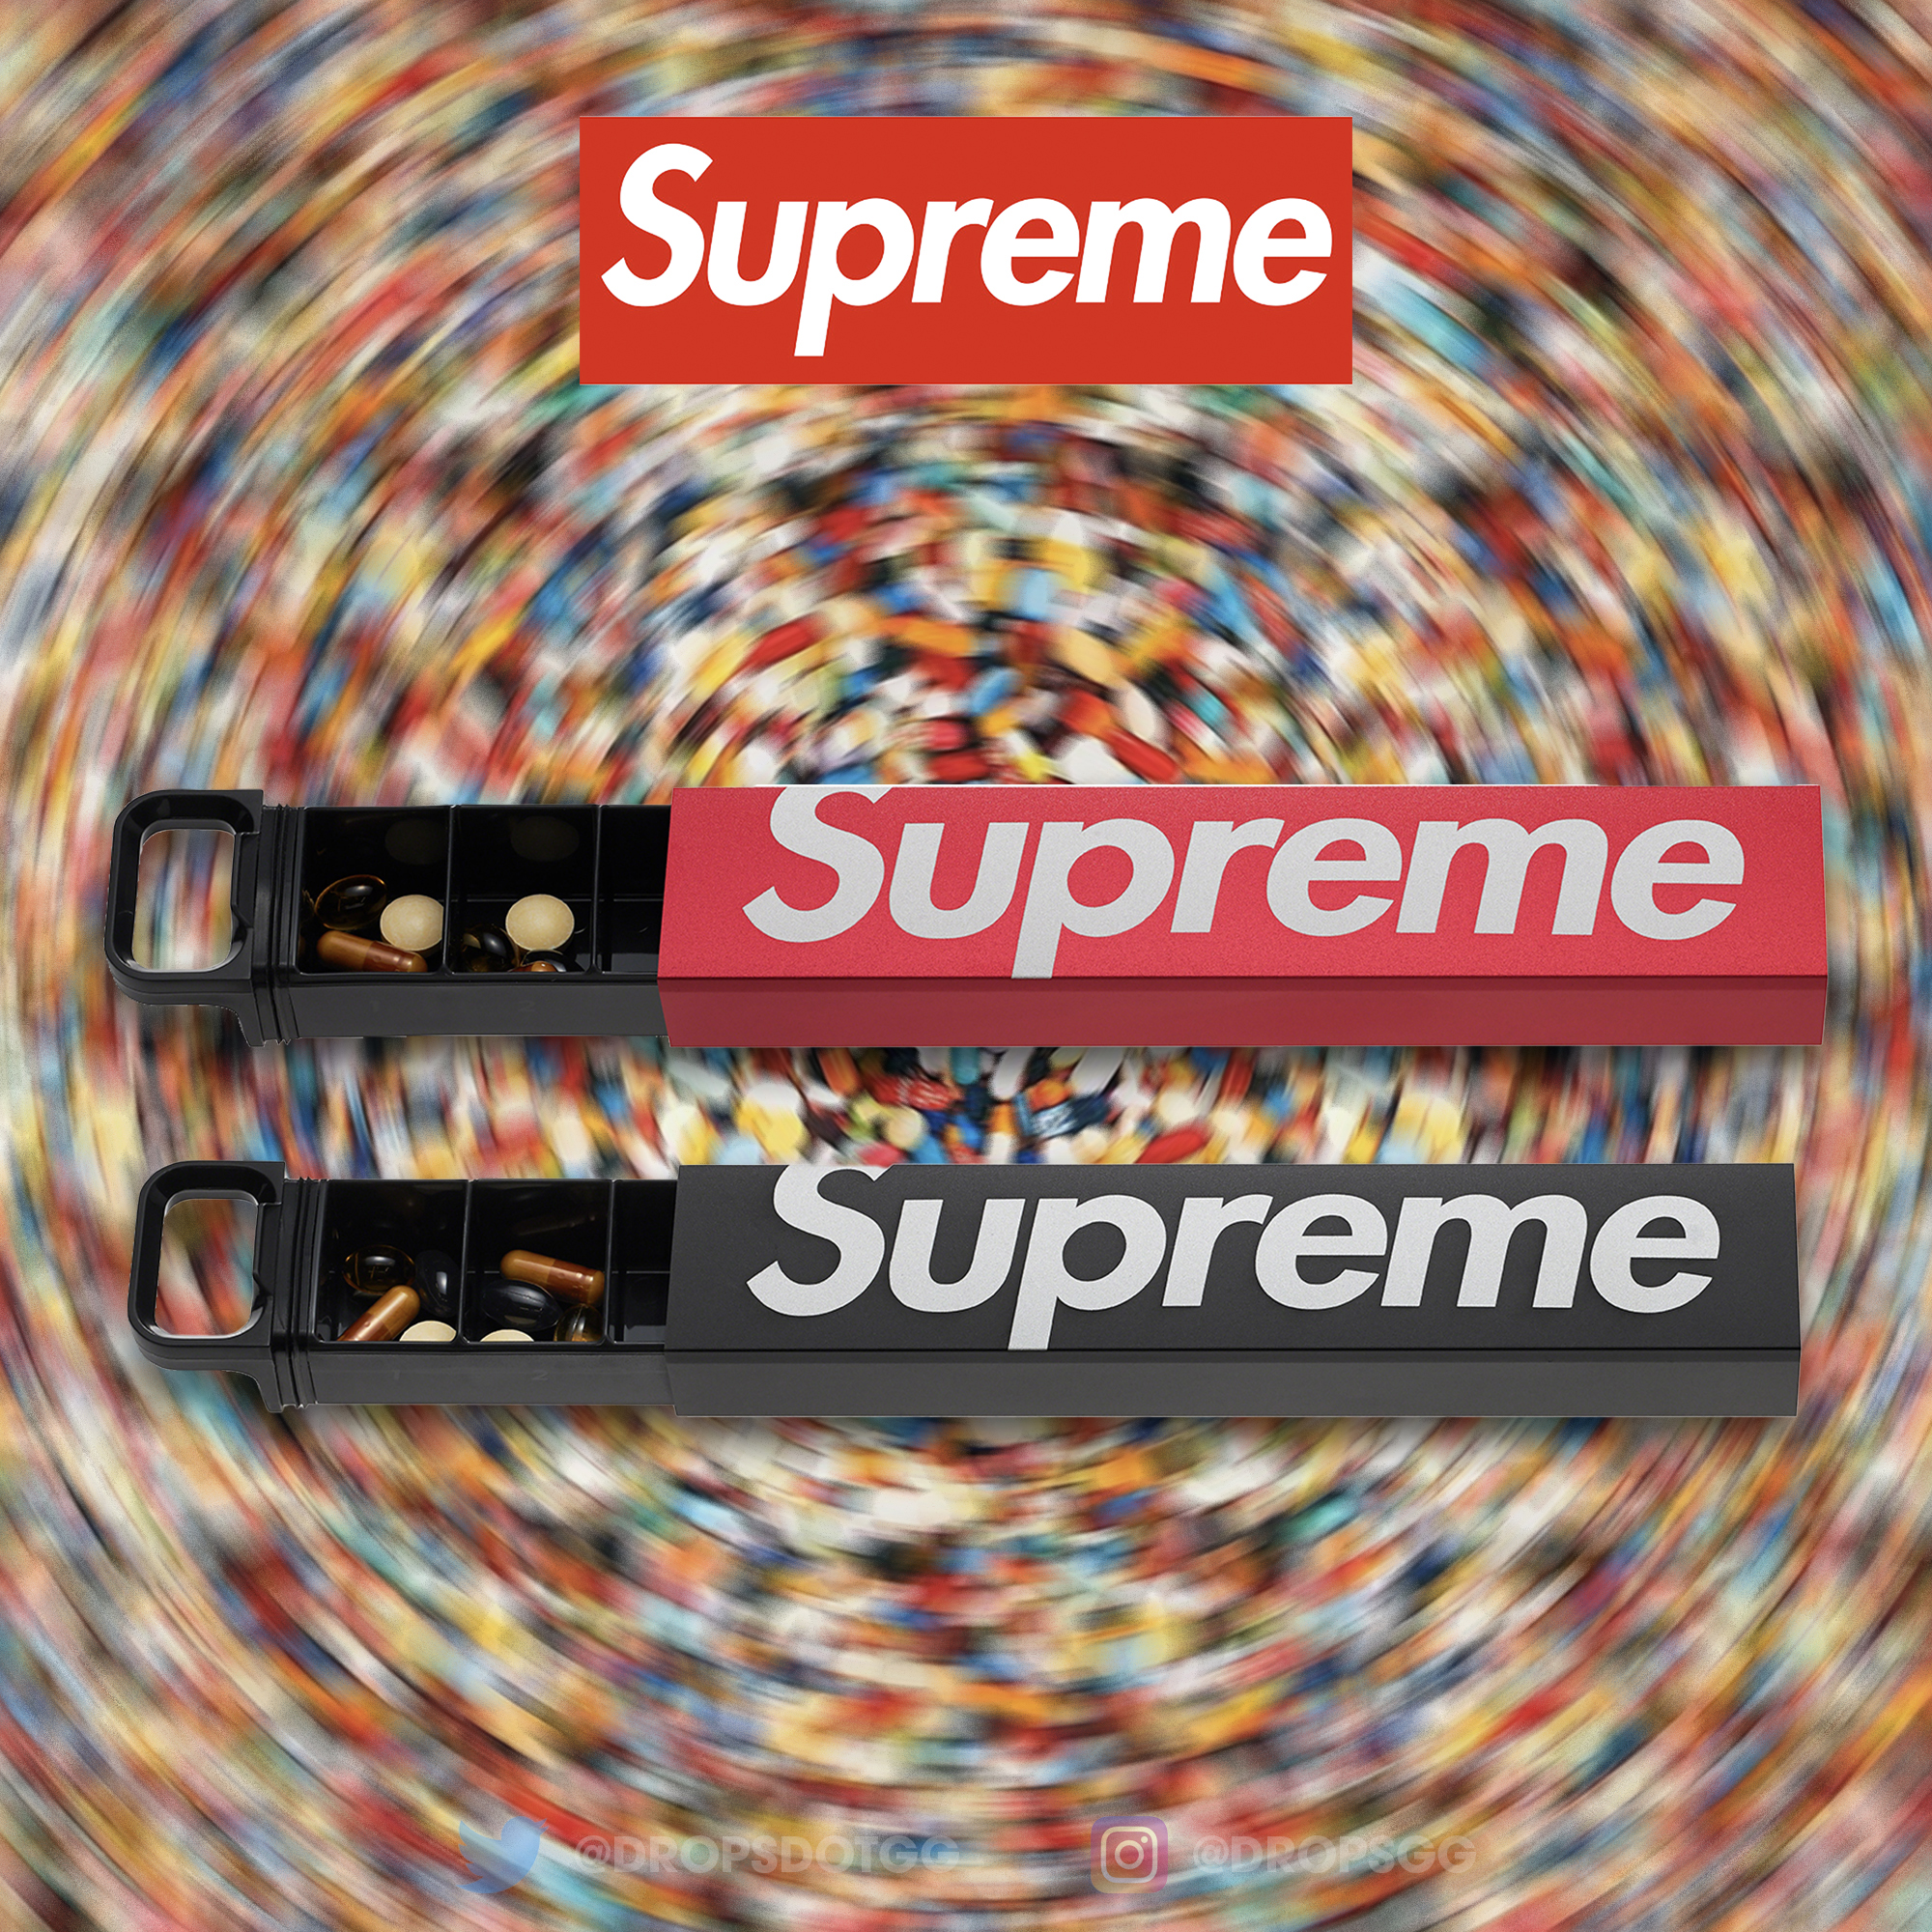 Supreme Drops on X: 